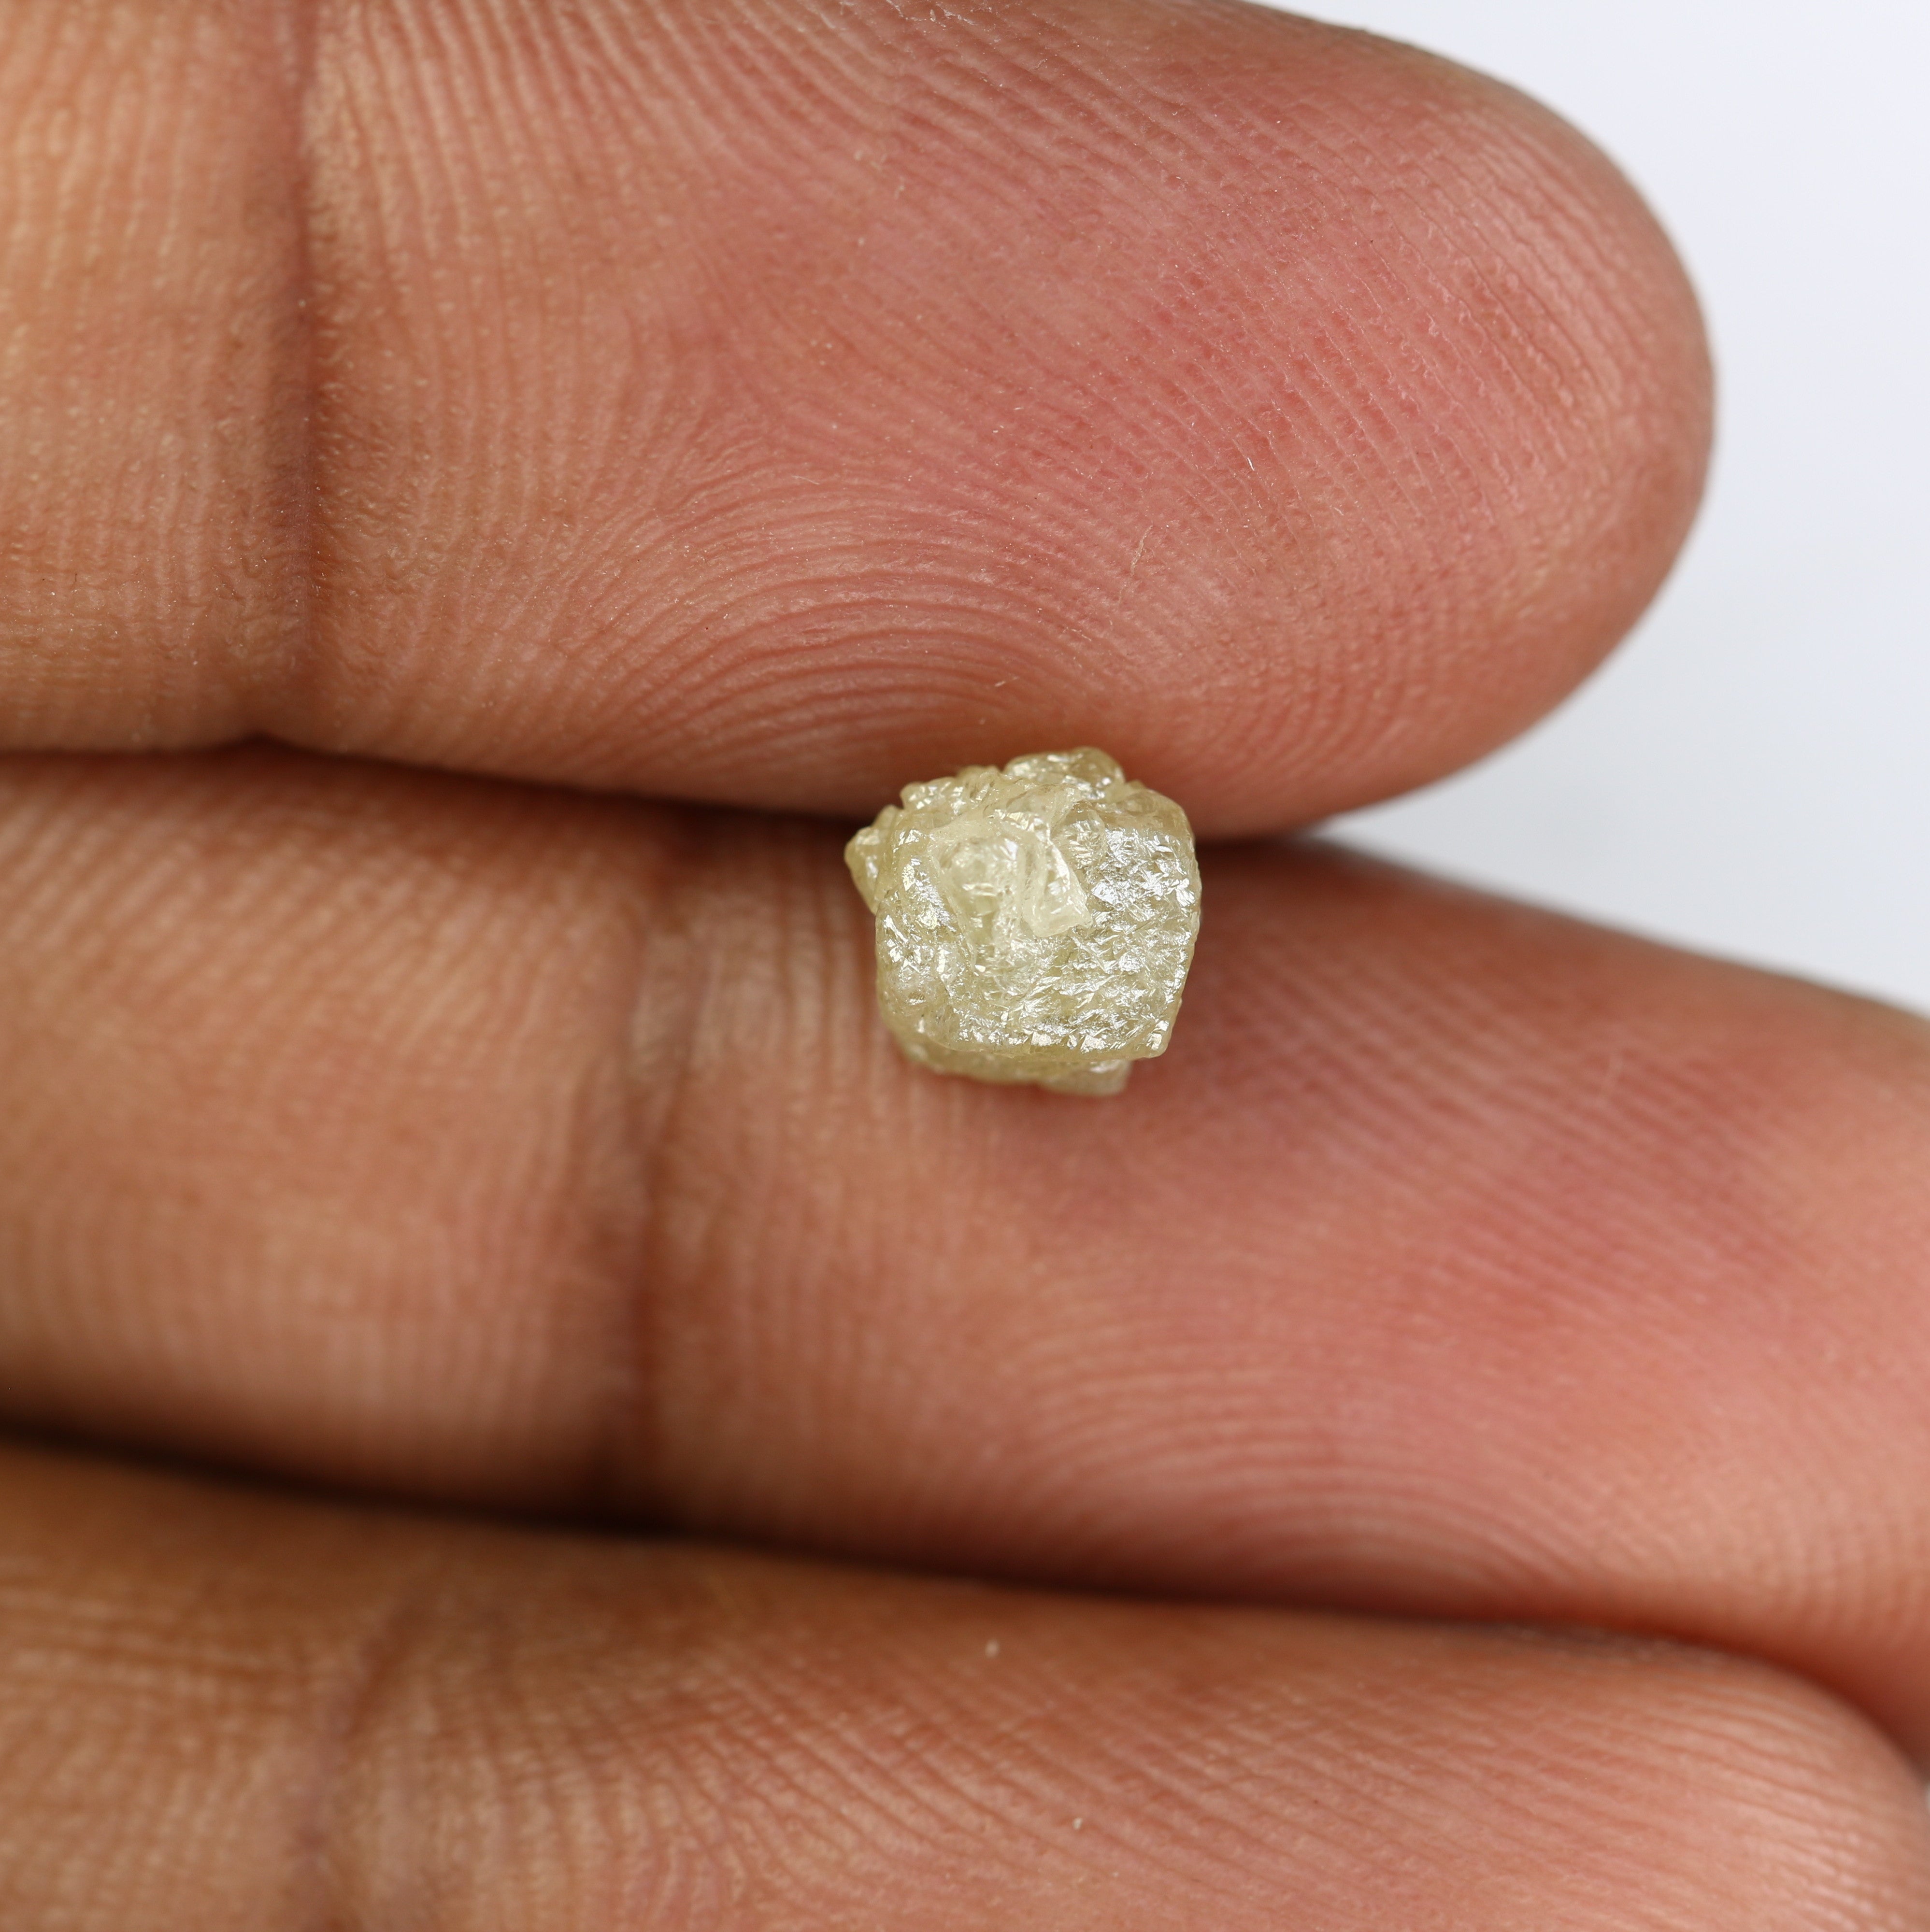 2.26 CT Grey Raw Rough Irregular Cut Diamond For Engagement Ring